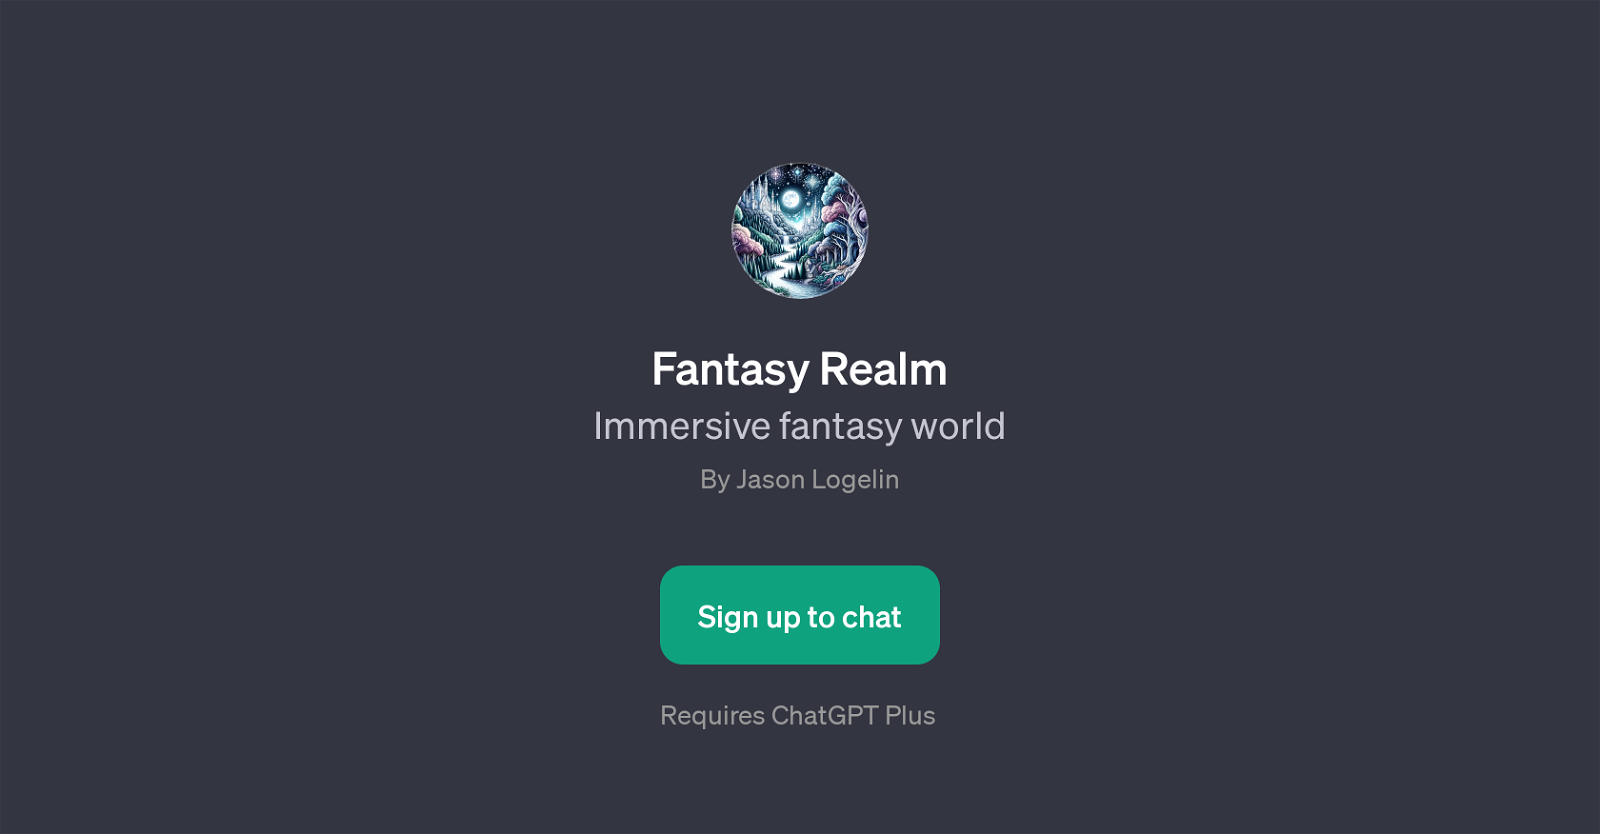 Fantasy Realm website